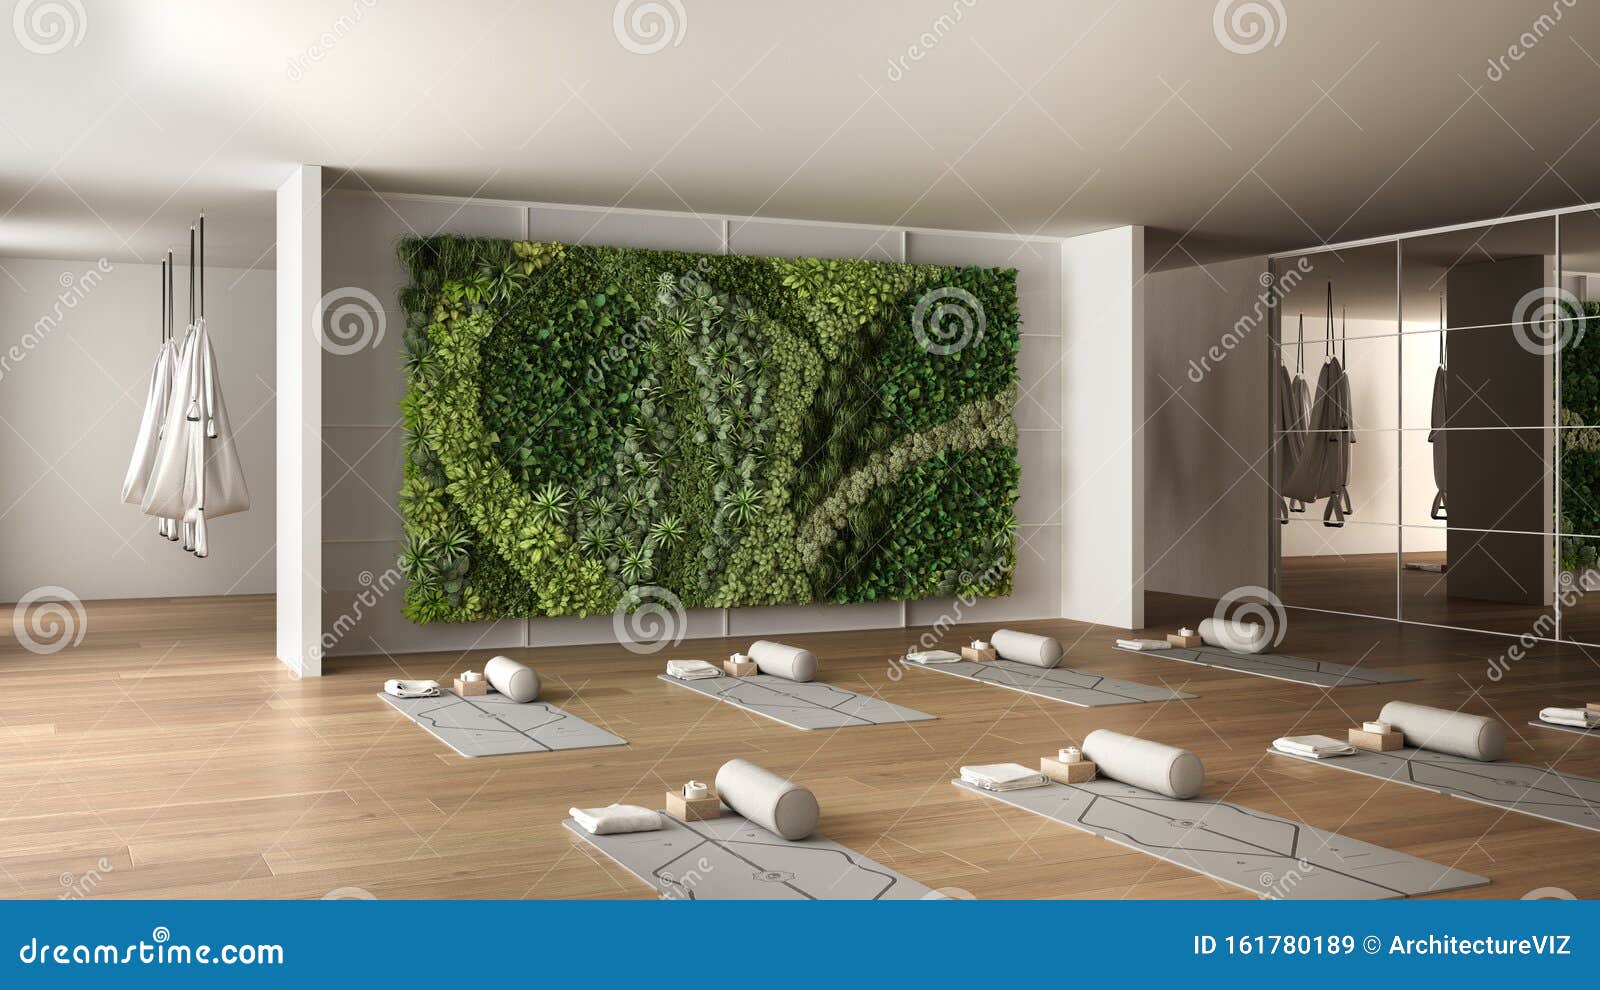 Empty Yoga Studio Interior Design, Space with Mats, Hammocks